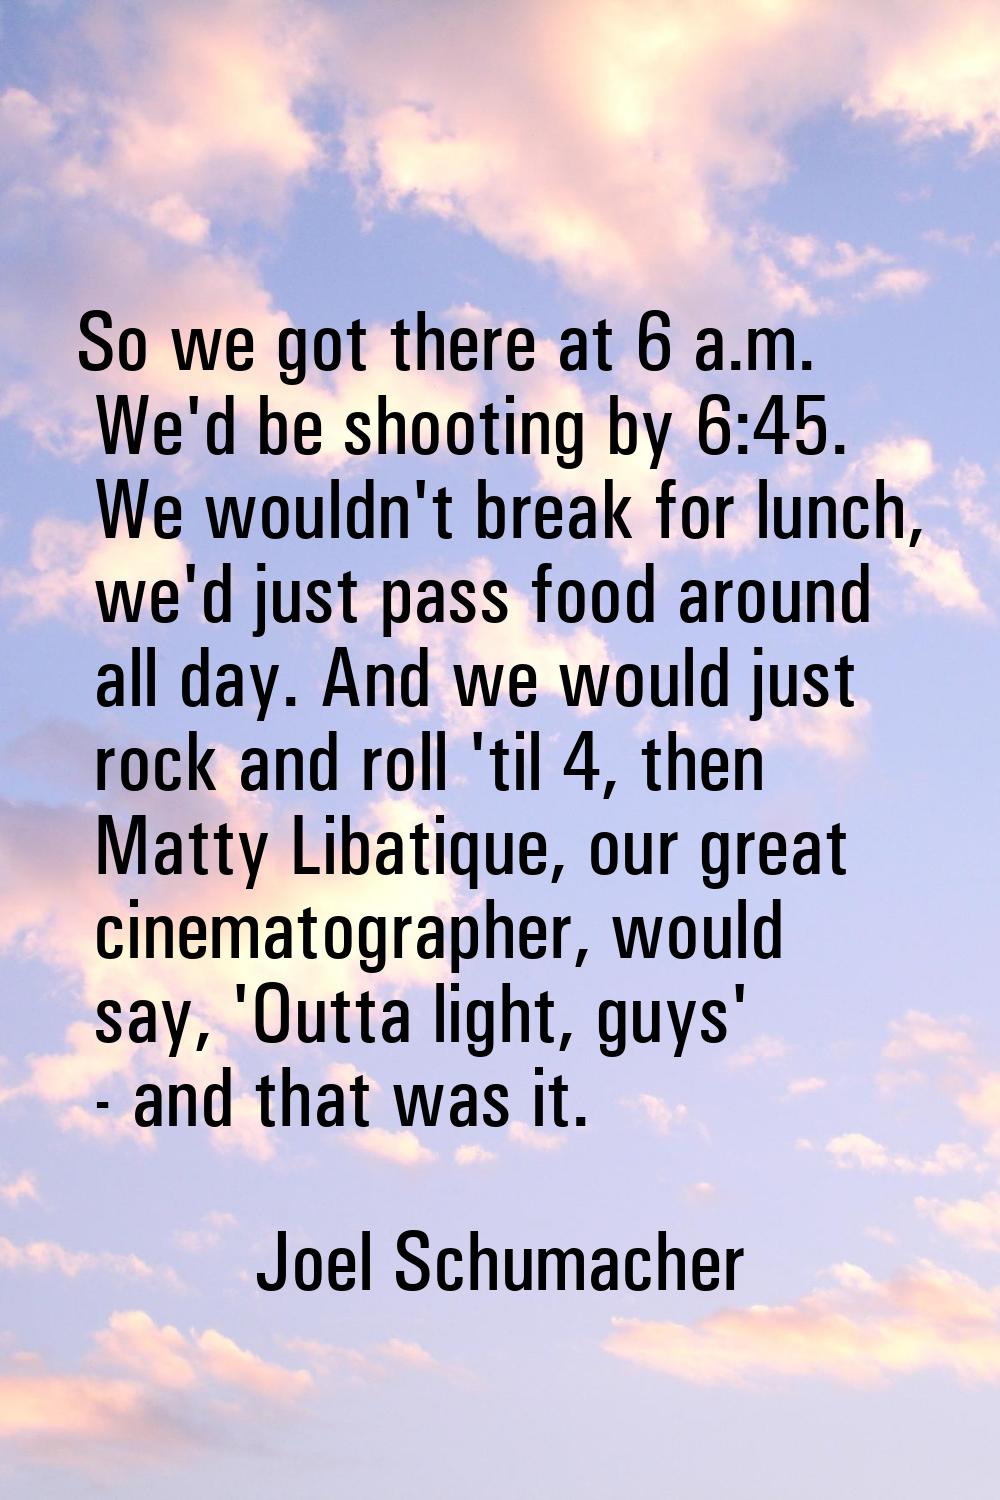 So we got there at 6 a.m. We'd be shooting by 6:45. We wouldn't break for lunch, we'd just pass foo